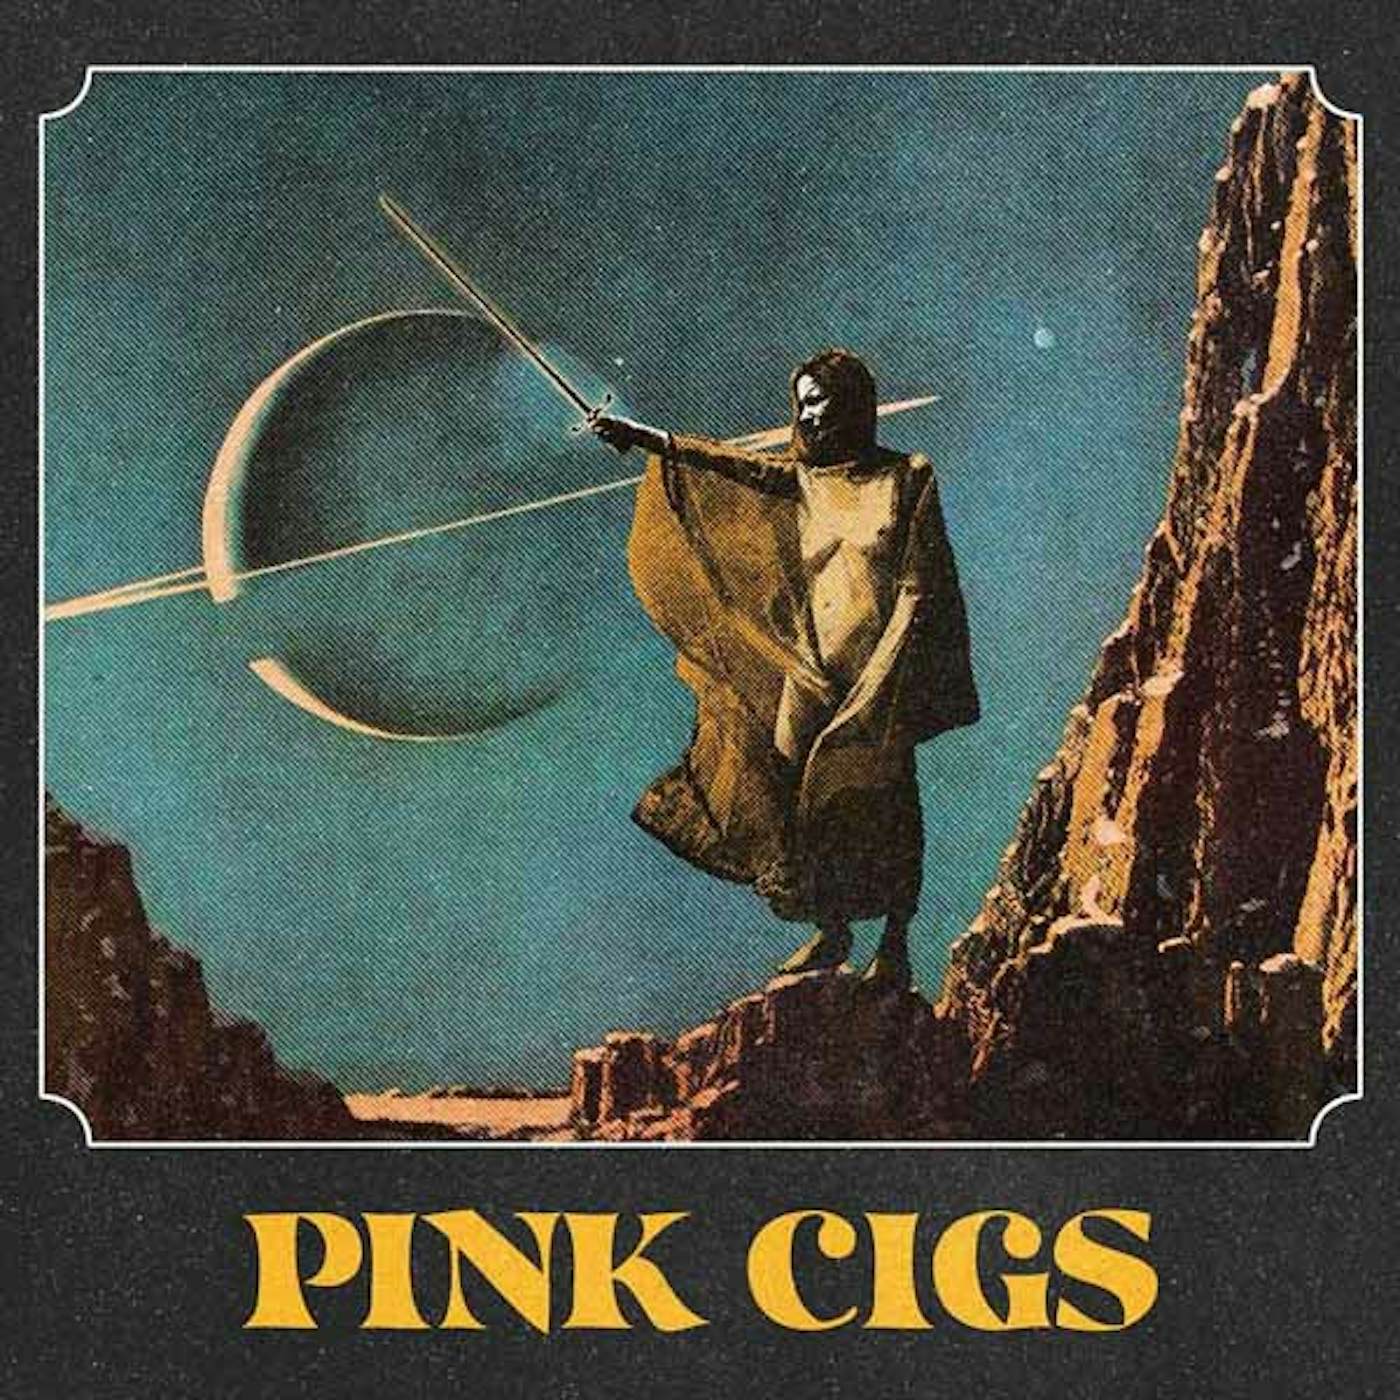 Pink Cigs LP - Pink Cigs (Vinyl)